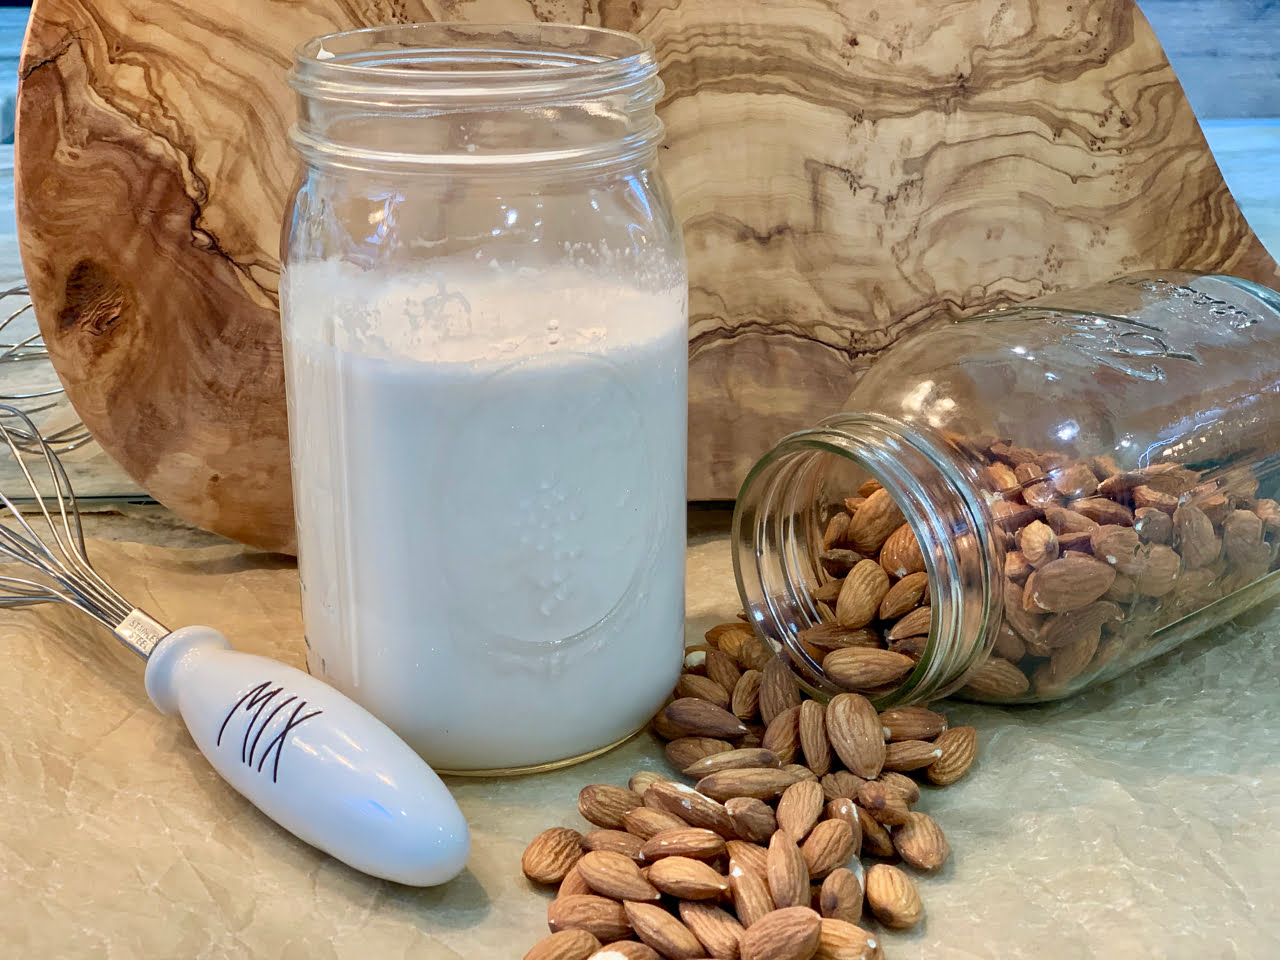 Healthiest Homemade Almond Milk